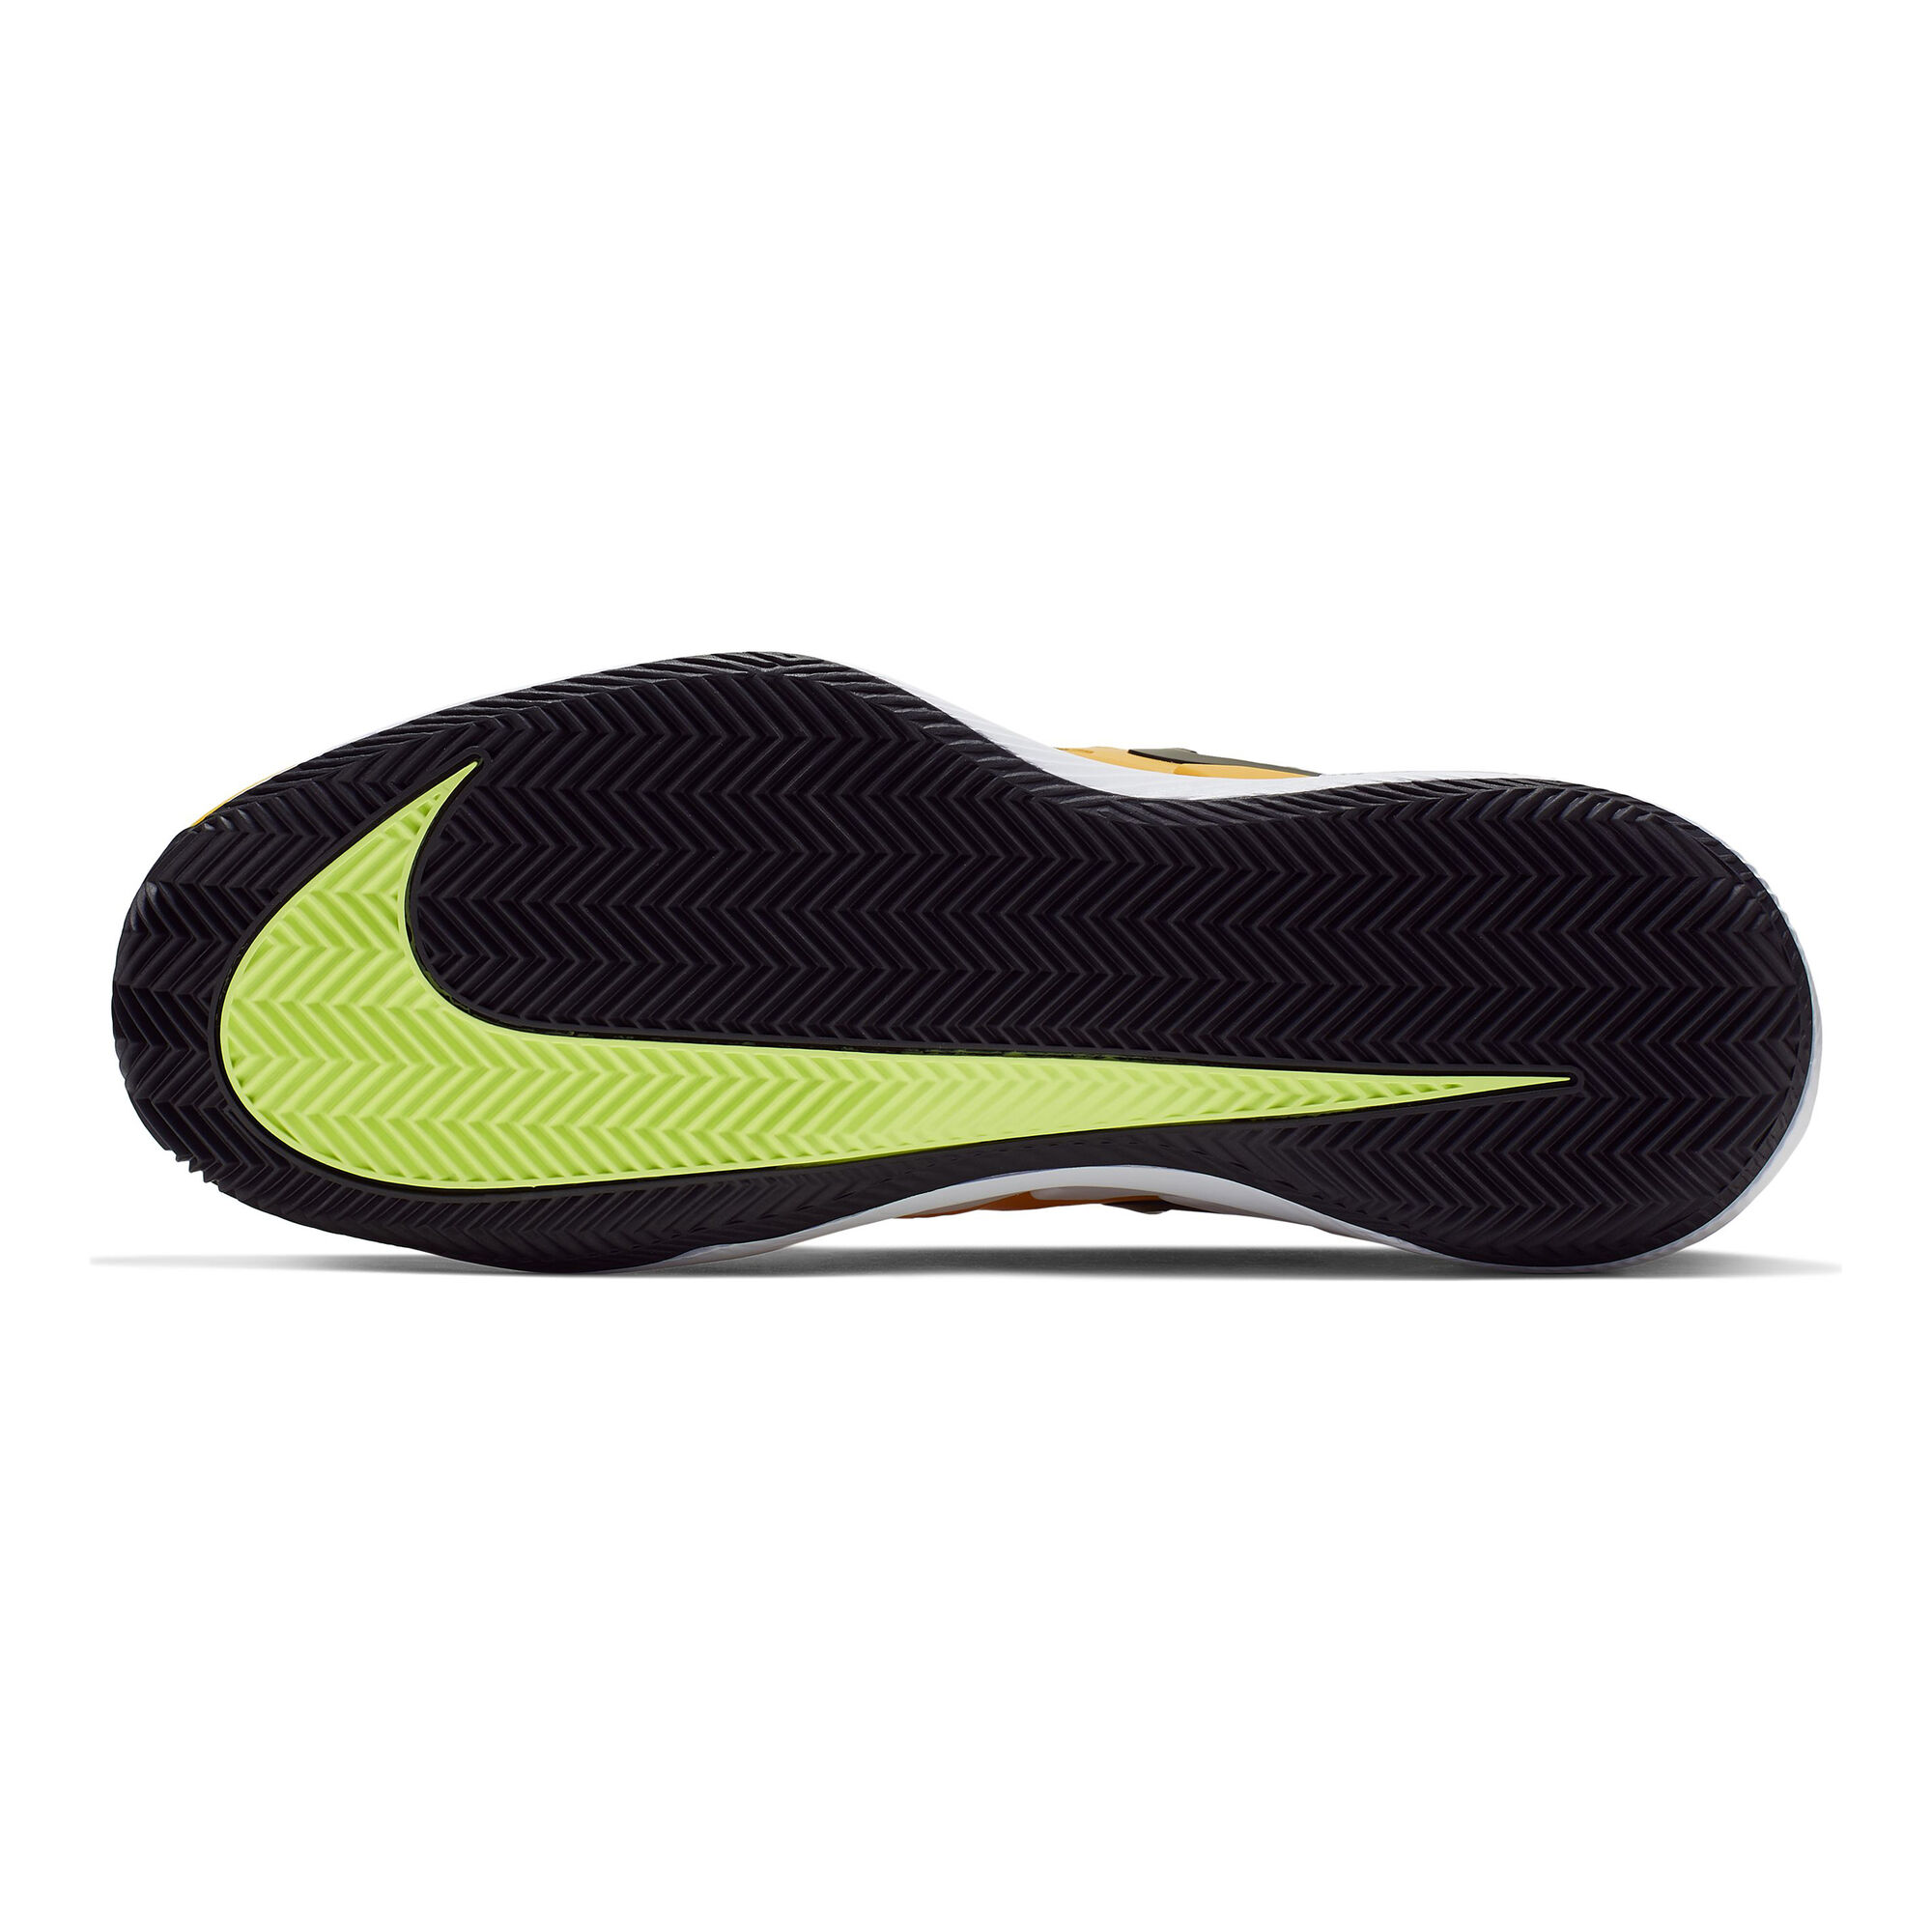 Buy Nike Air Zoom Vapor X Clay Court Shoe Men Golden Yellow, Black ...